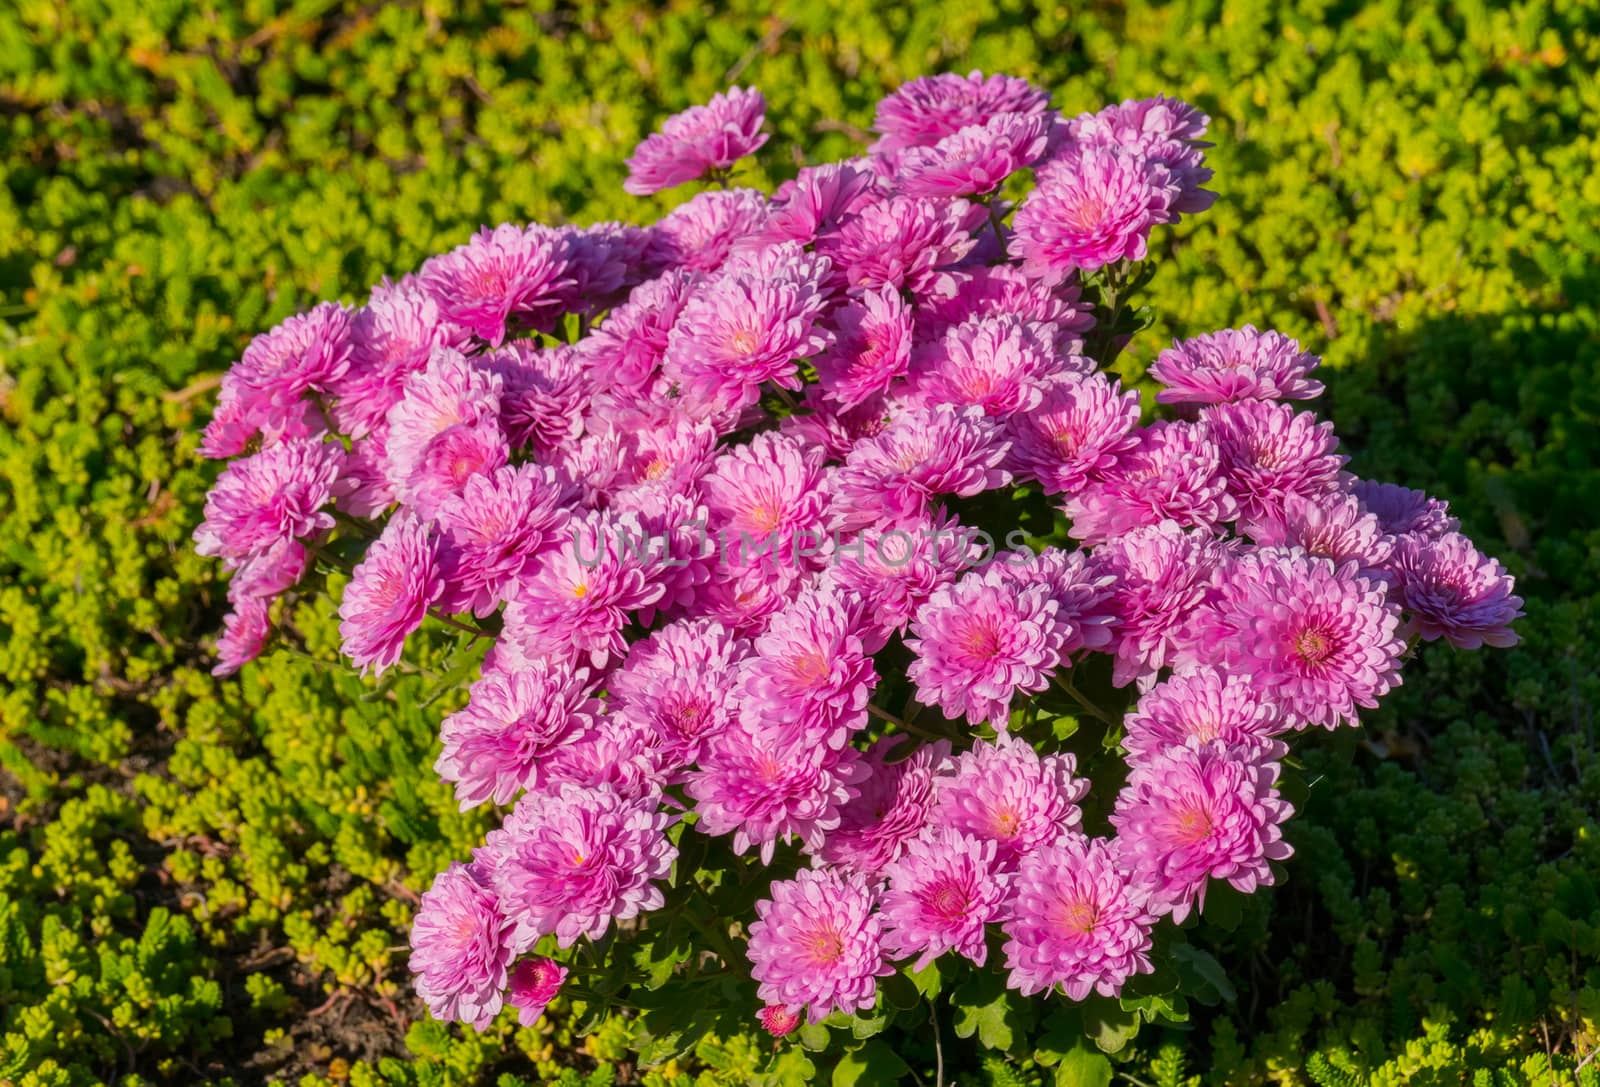 Dense bush of pink flowers of chrysanthemums of light tangled wi by Adamchuk